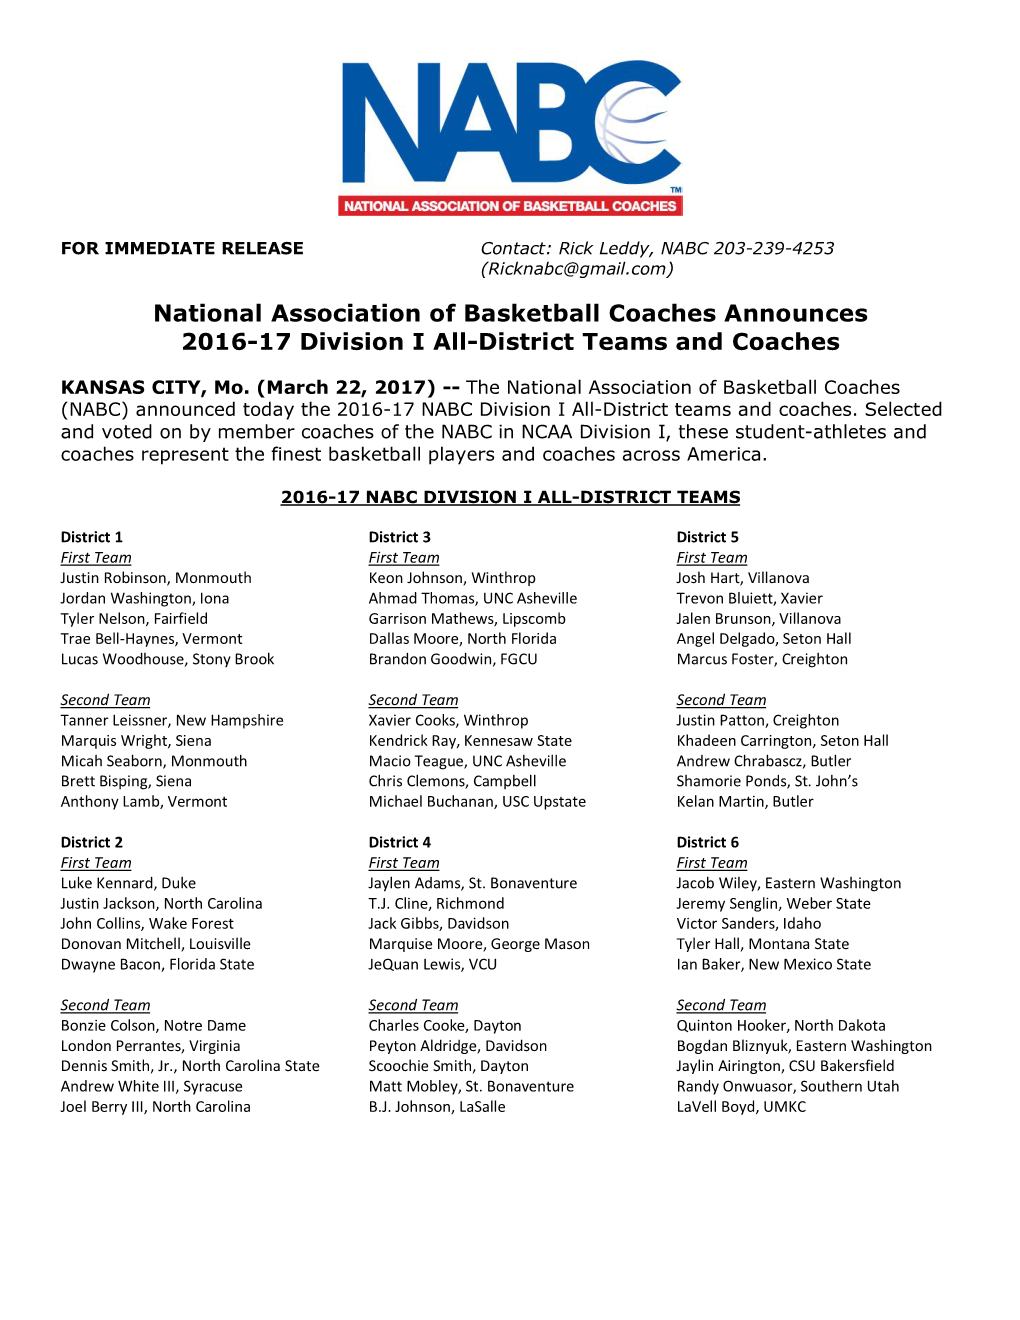 National Association of Basketball Coaches Announces 2016-17